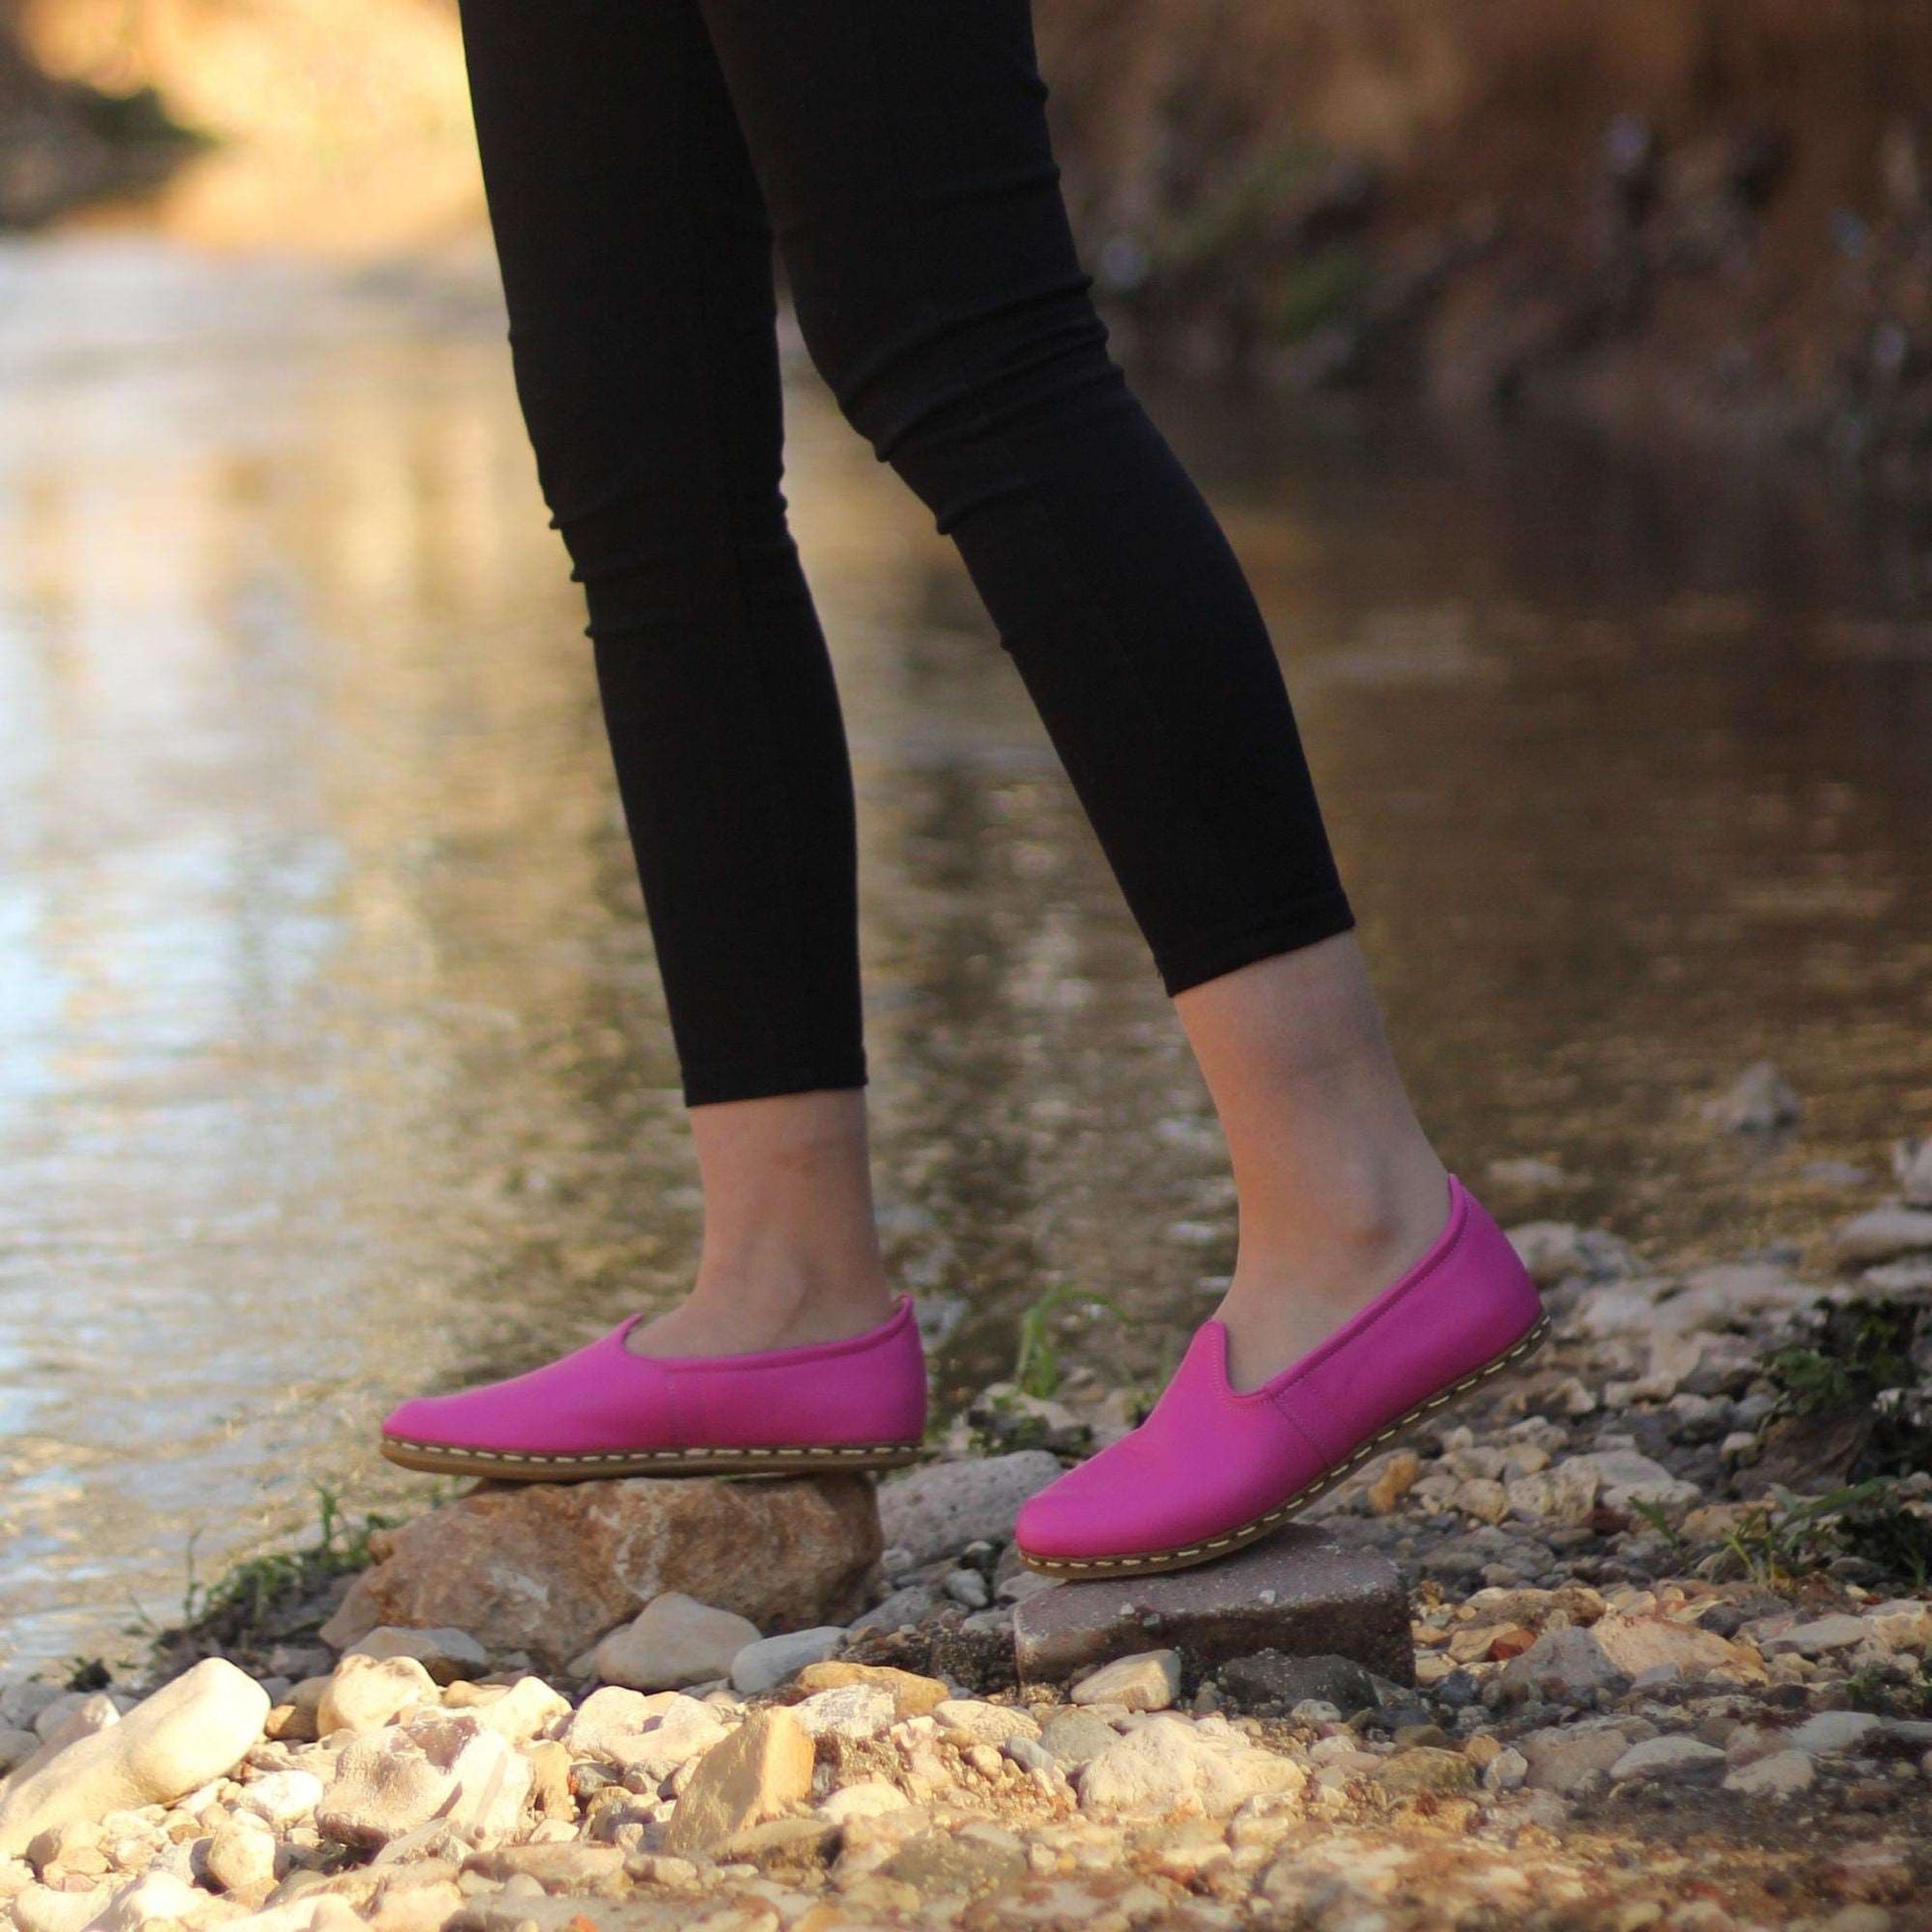 Women Shoes Handmade Pink Leather Yemeni Rubber Sole